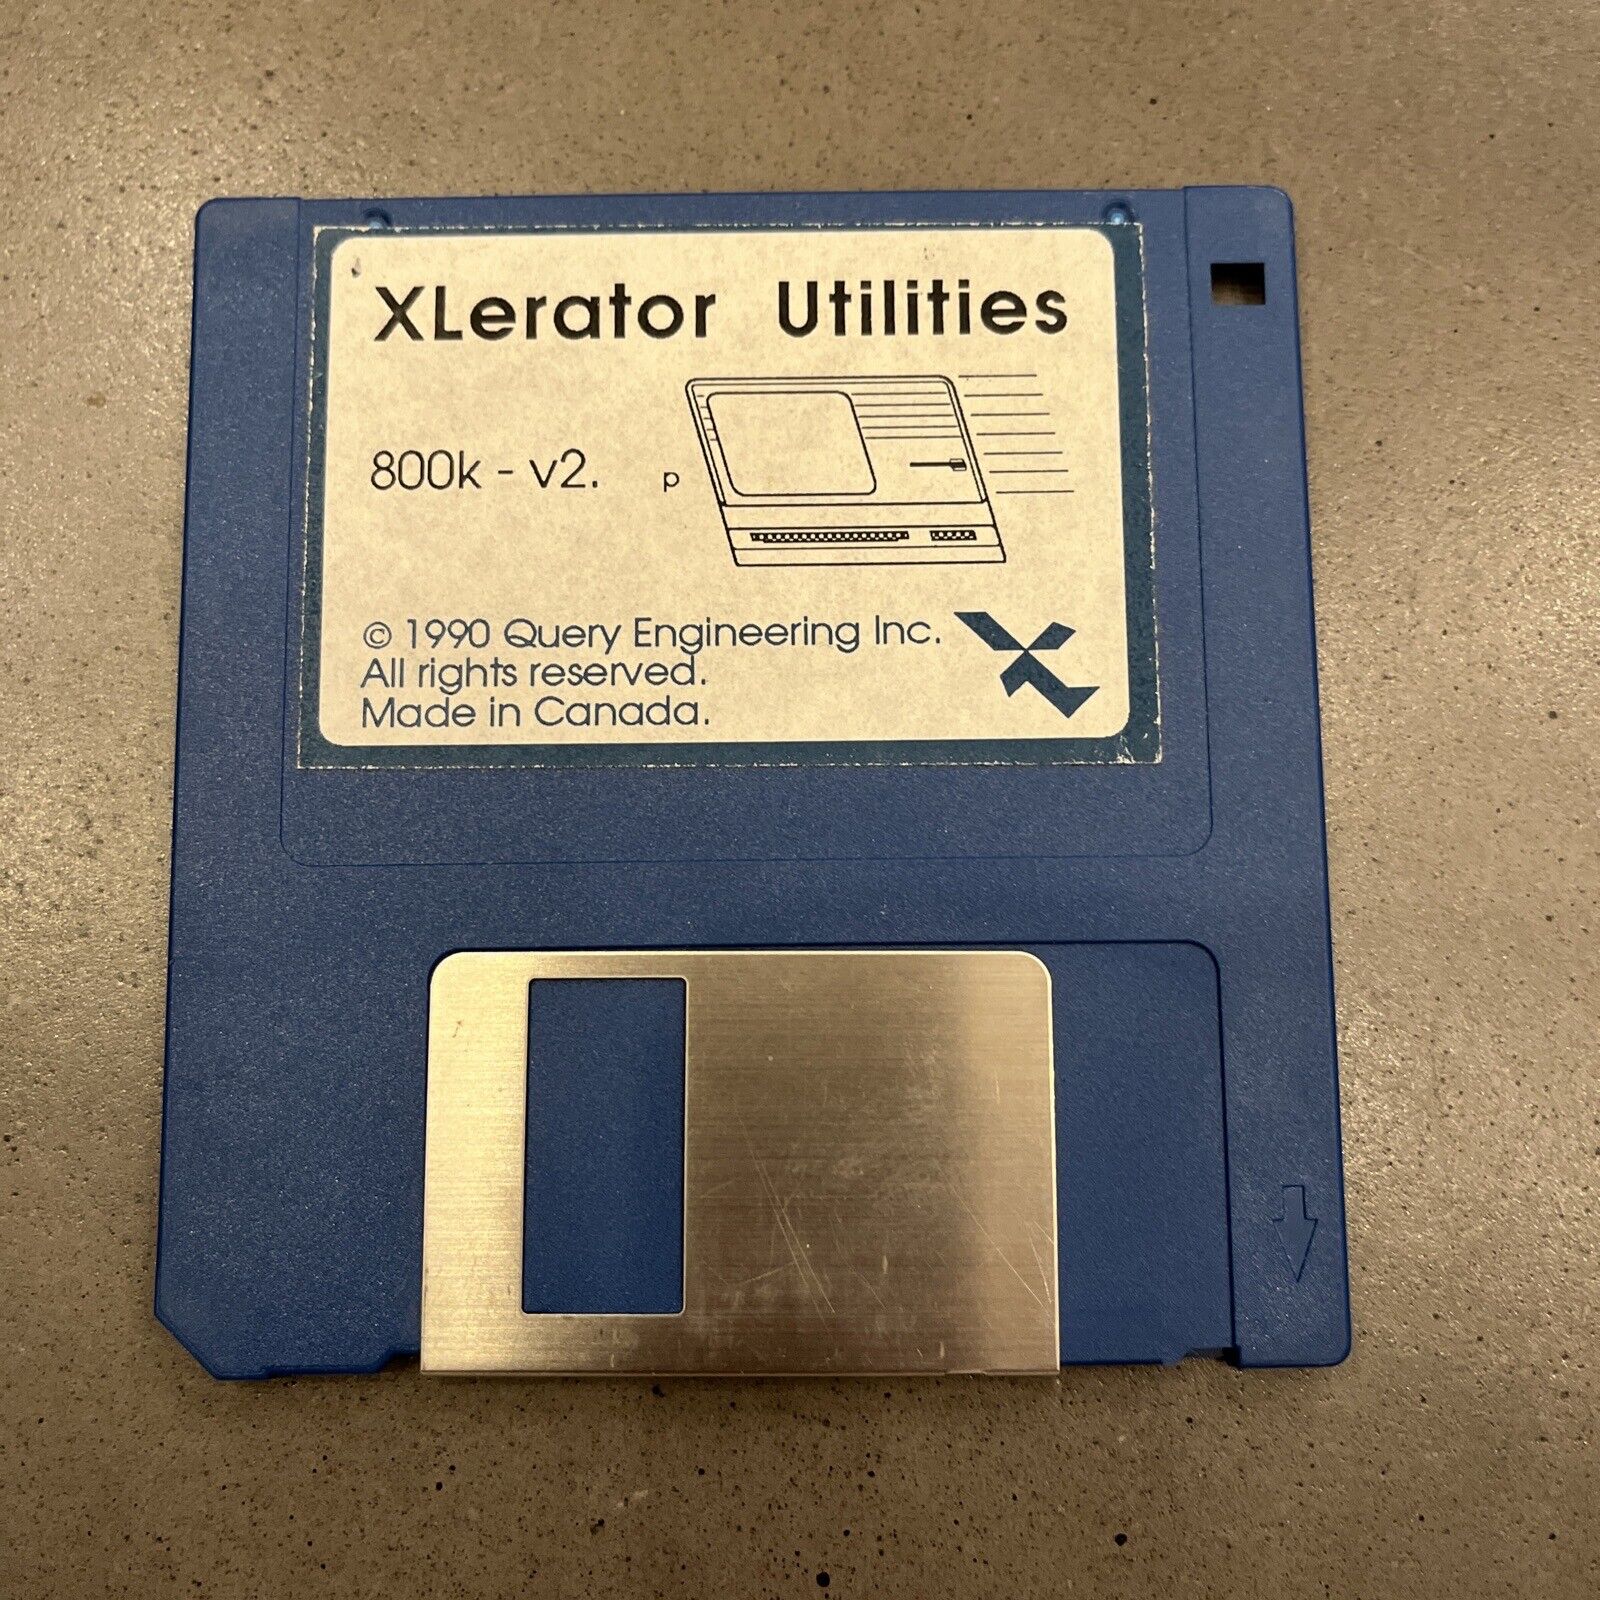 Apple Lisa XLerator Utilities 800k - V2 Software - 3.5 Inch Floppy - Rare